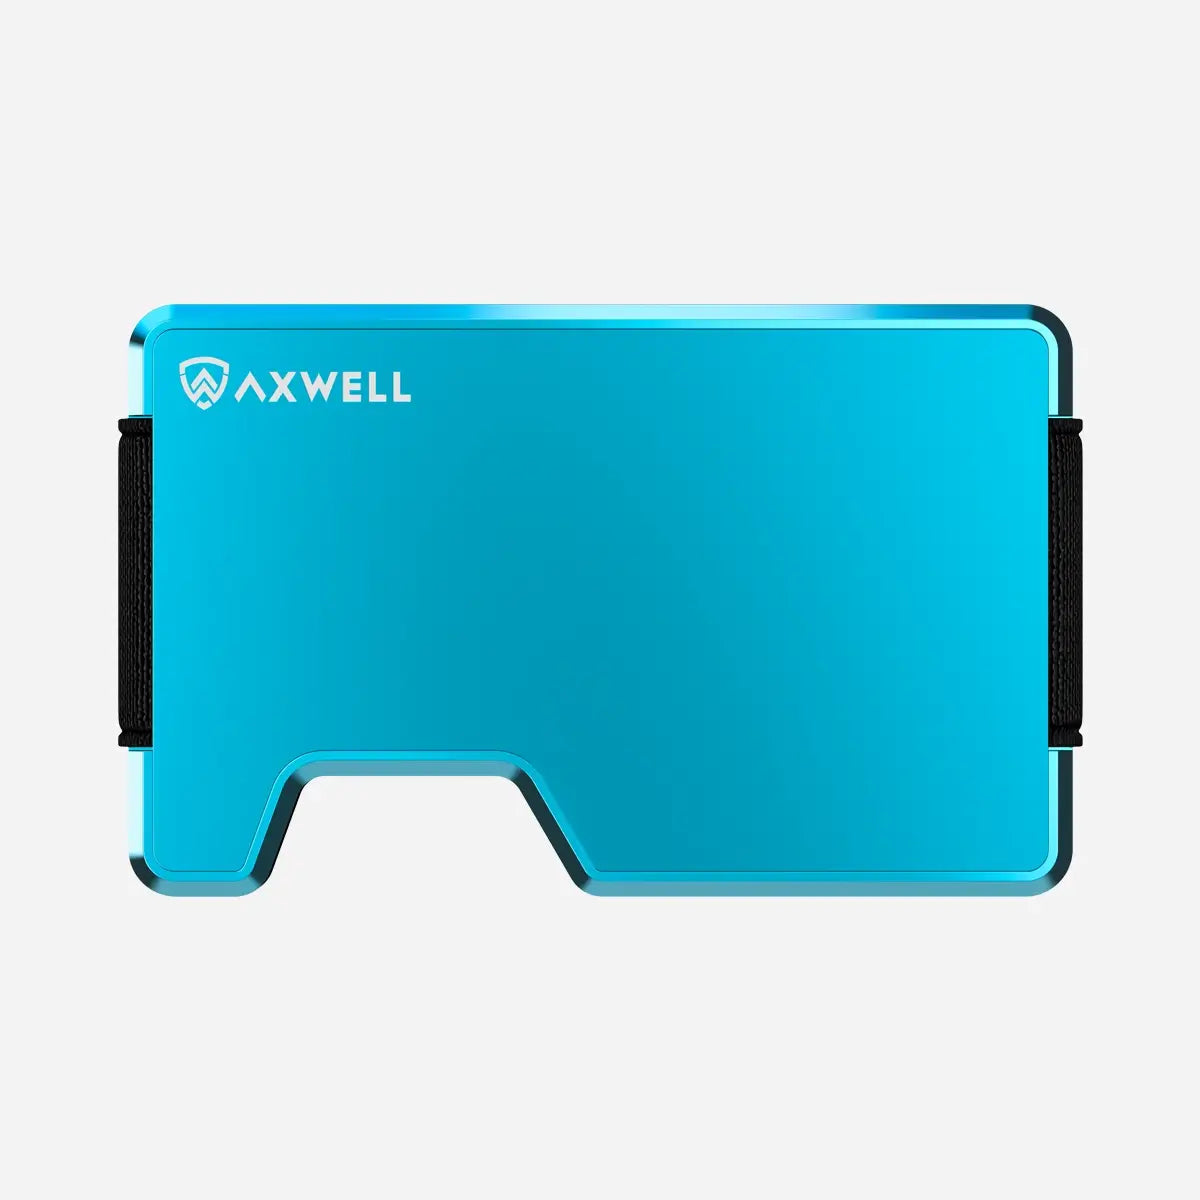 Axwell Wallet - America's #1 Metal Wallet For Men